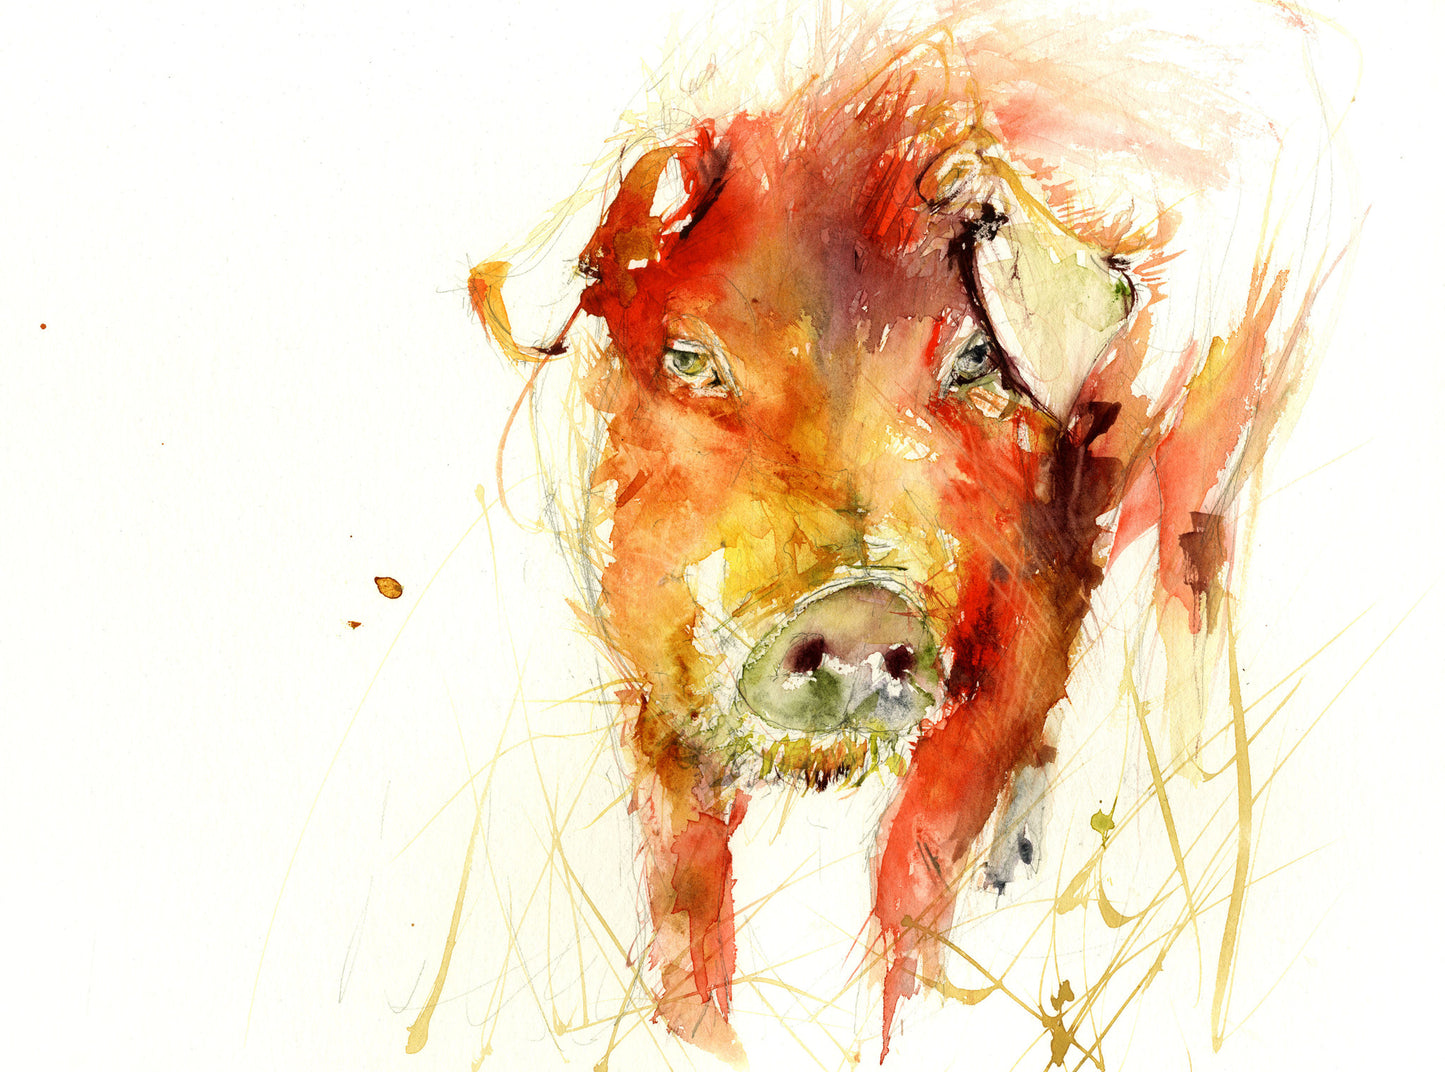 JEN BUCKLEY signed LIMITED EDITON PRINT of my original PIG - Jen Buckley Art limited edition animal art prints